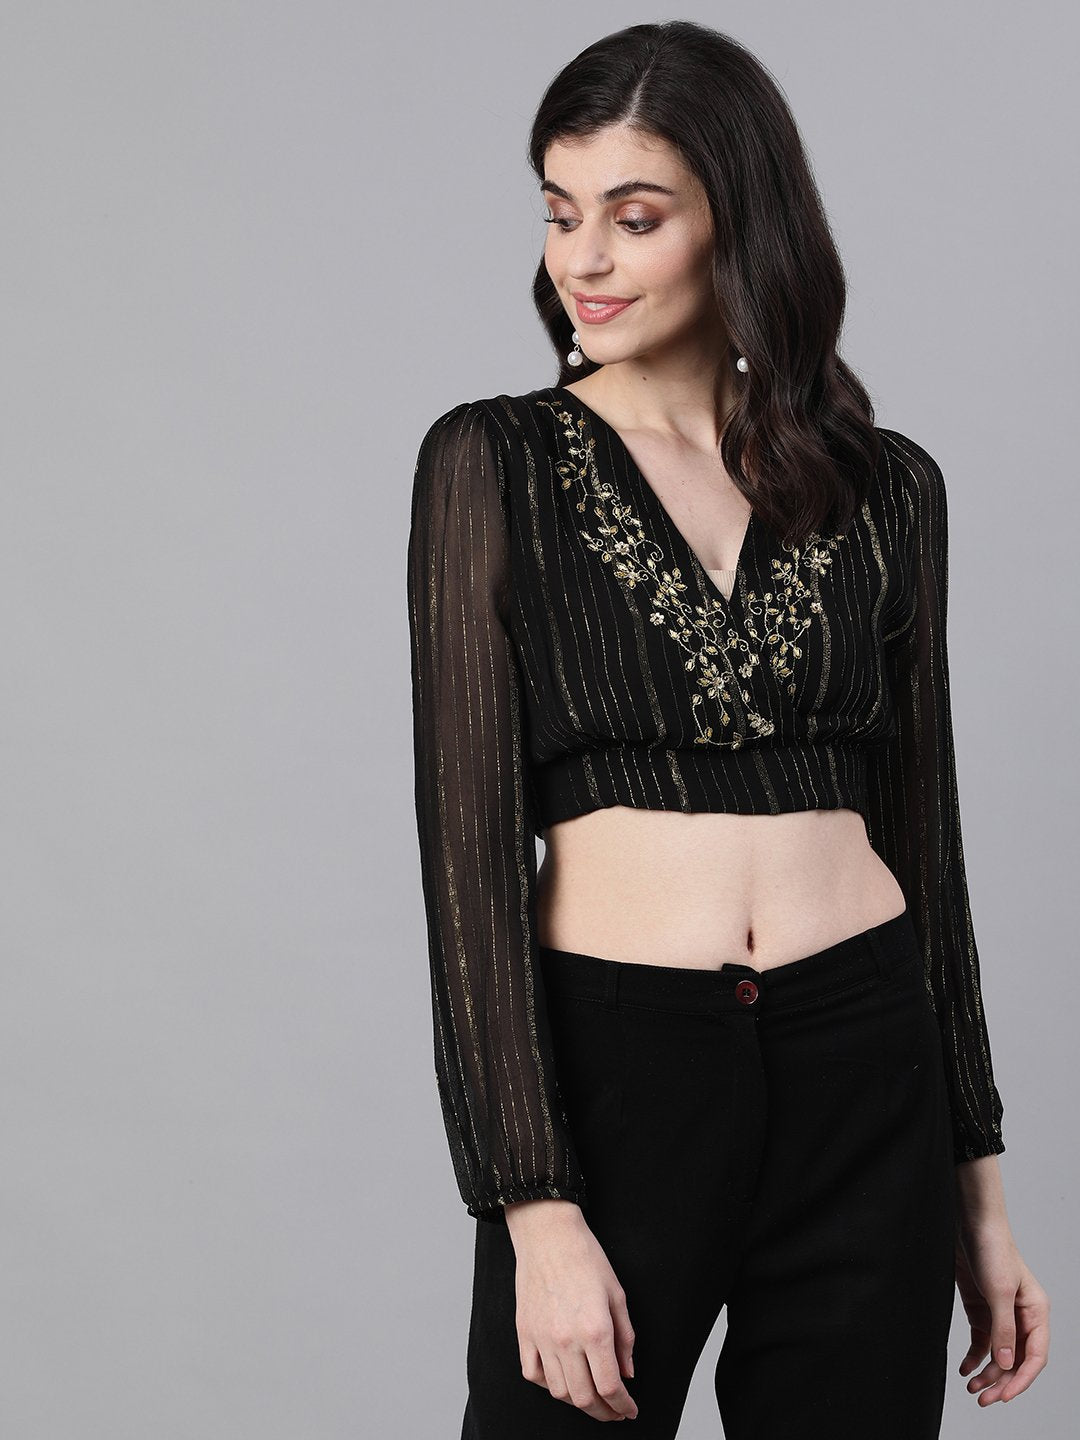 Ishin Women's Polyester Black Lurex Embellished Jewel Neck Crop Top